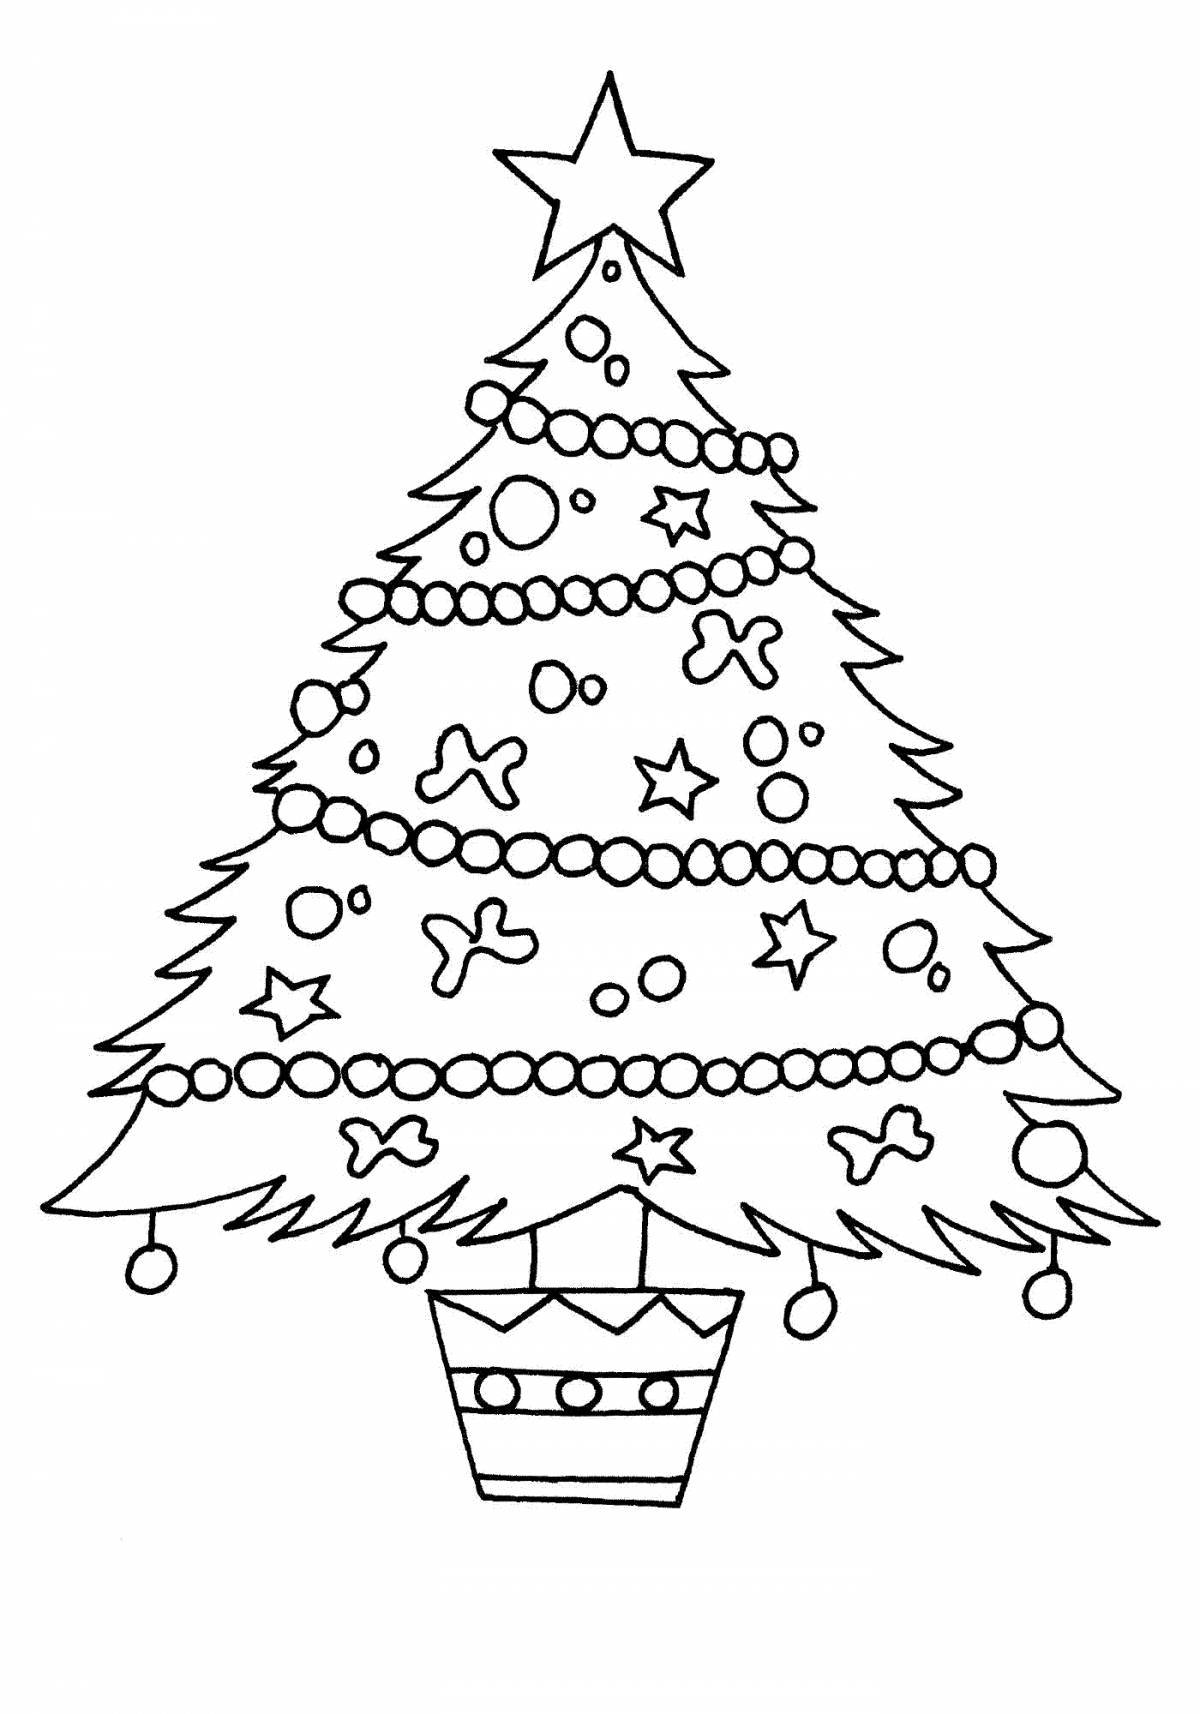 Christmas tree grand coloring page